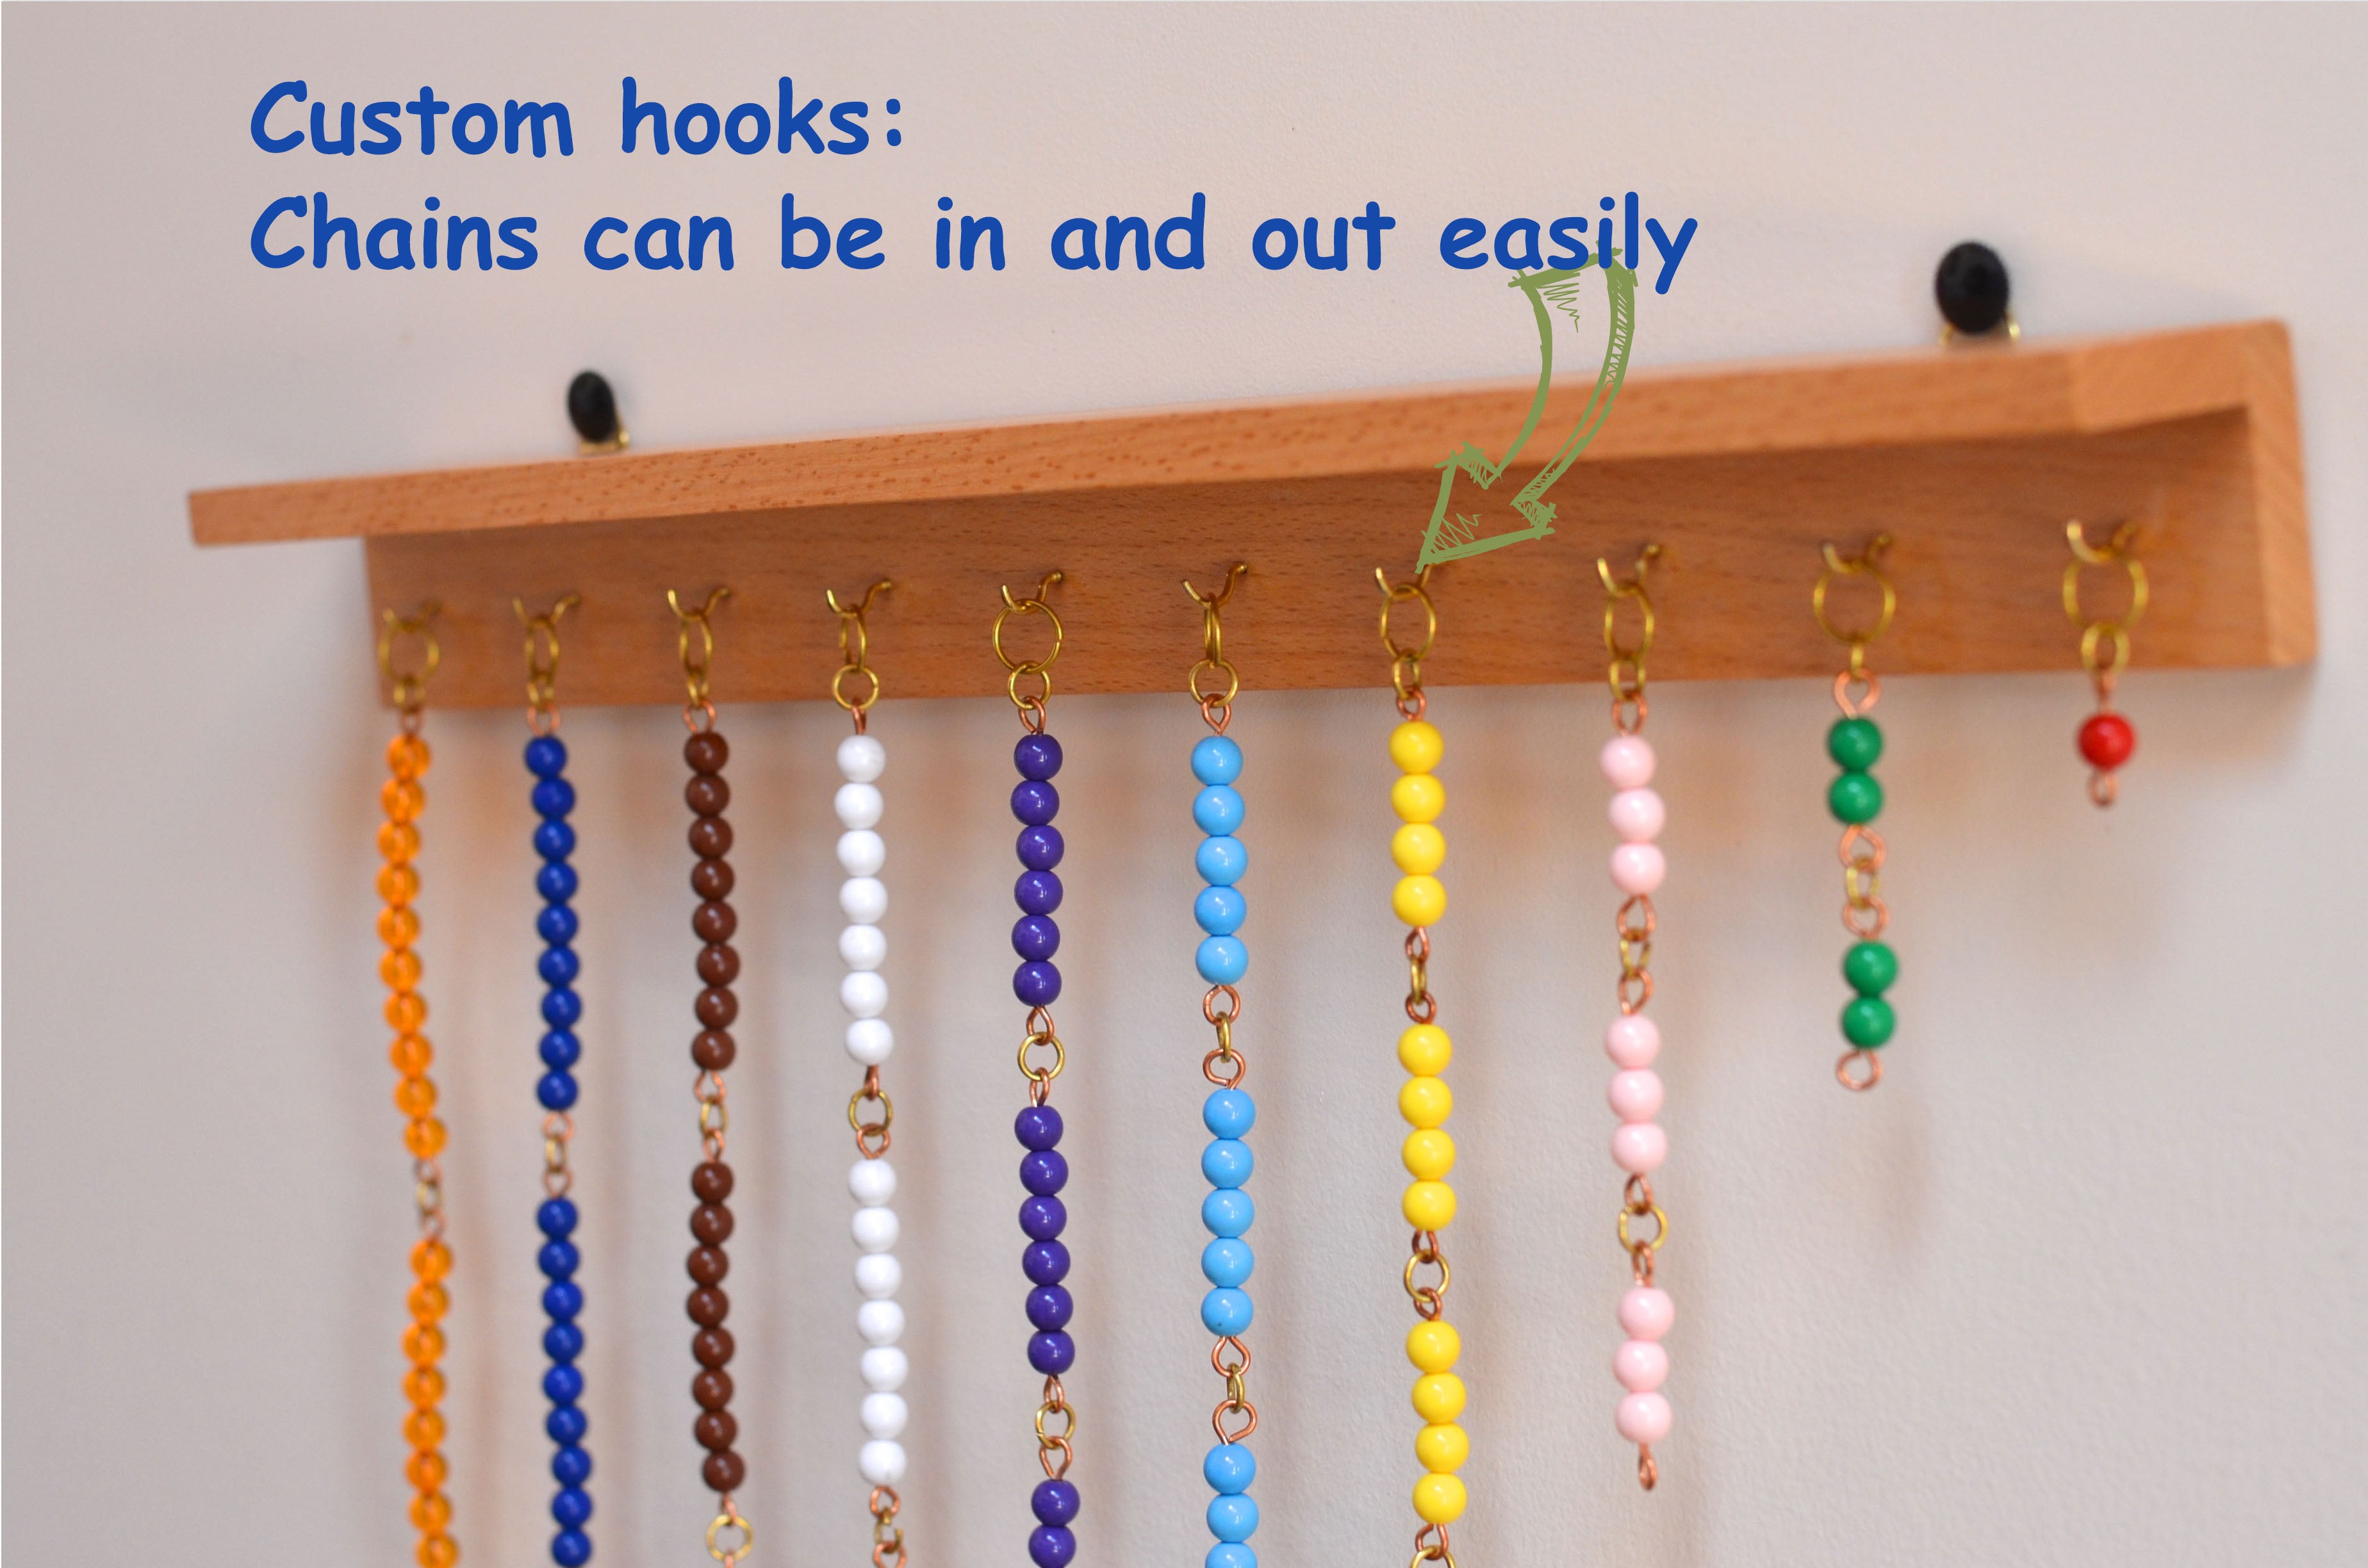 Montessori short bead chains